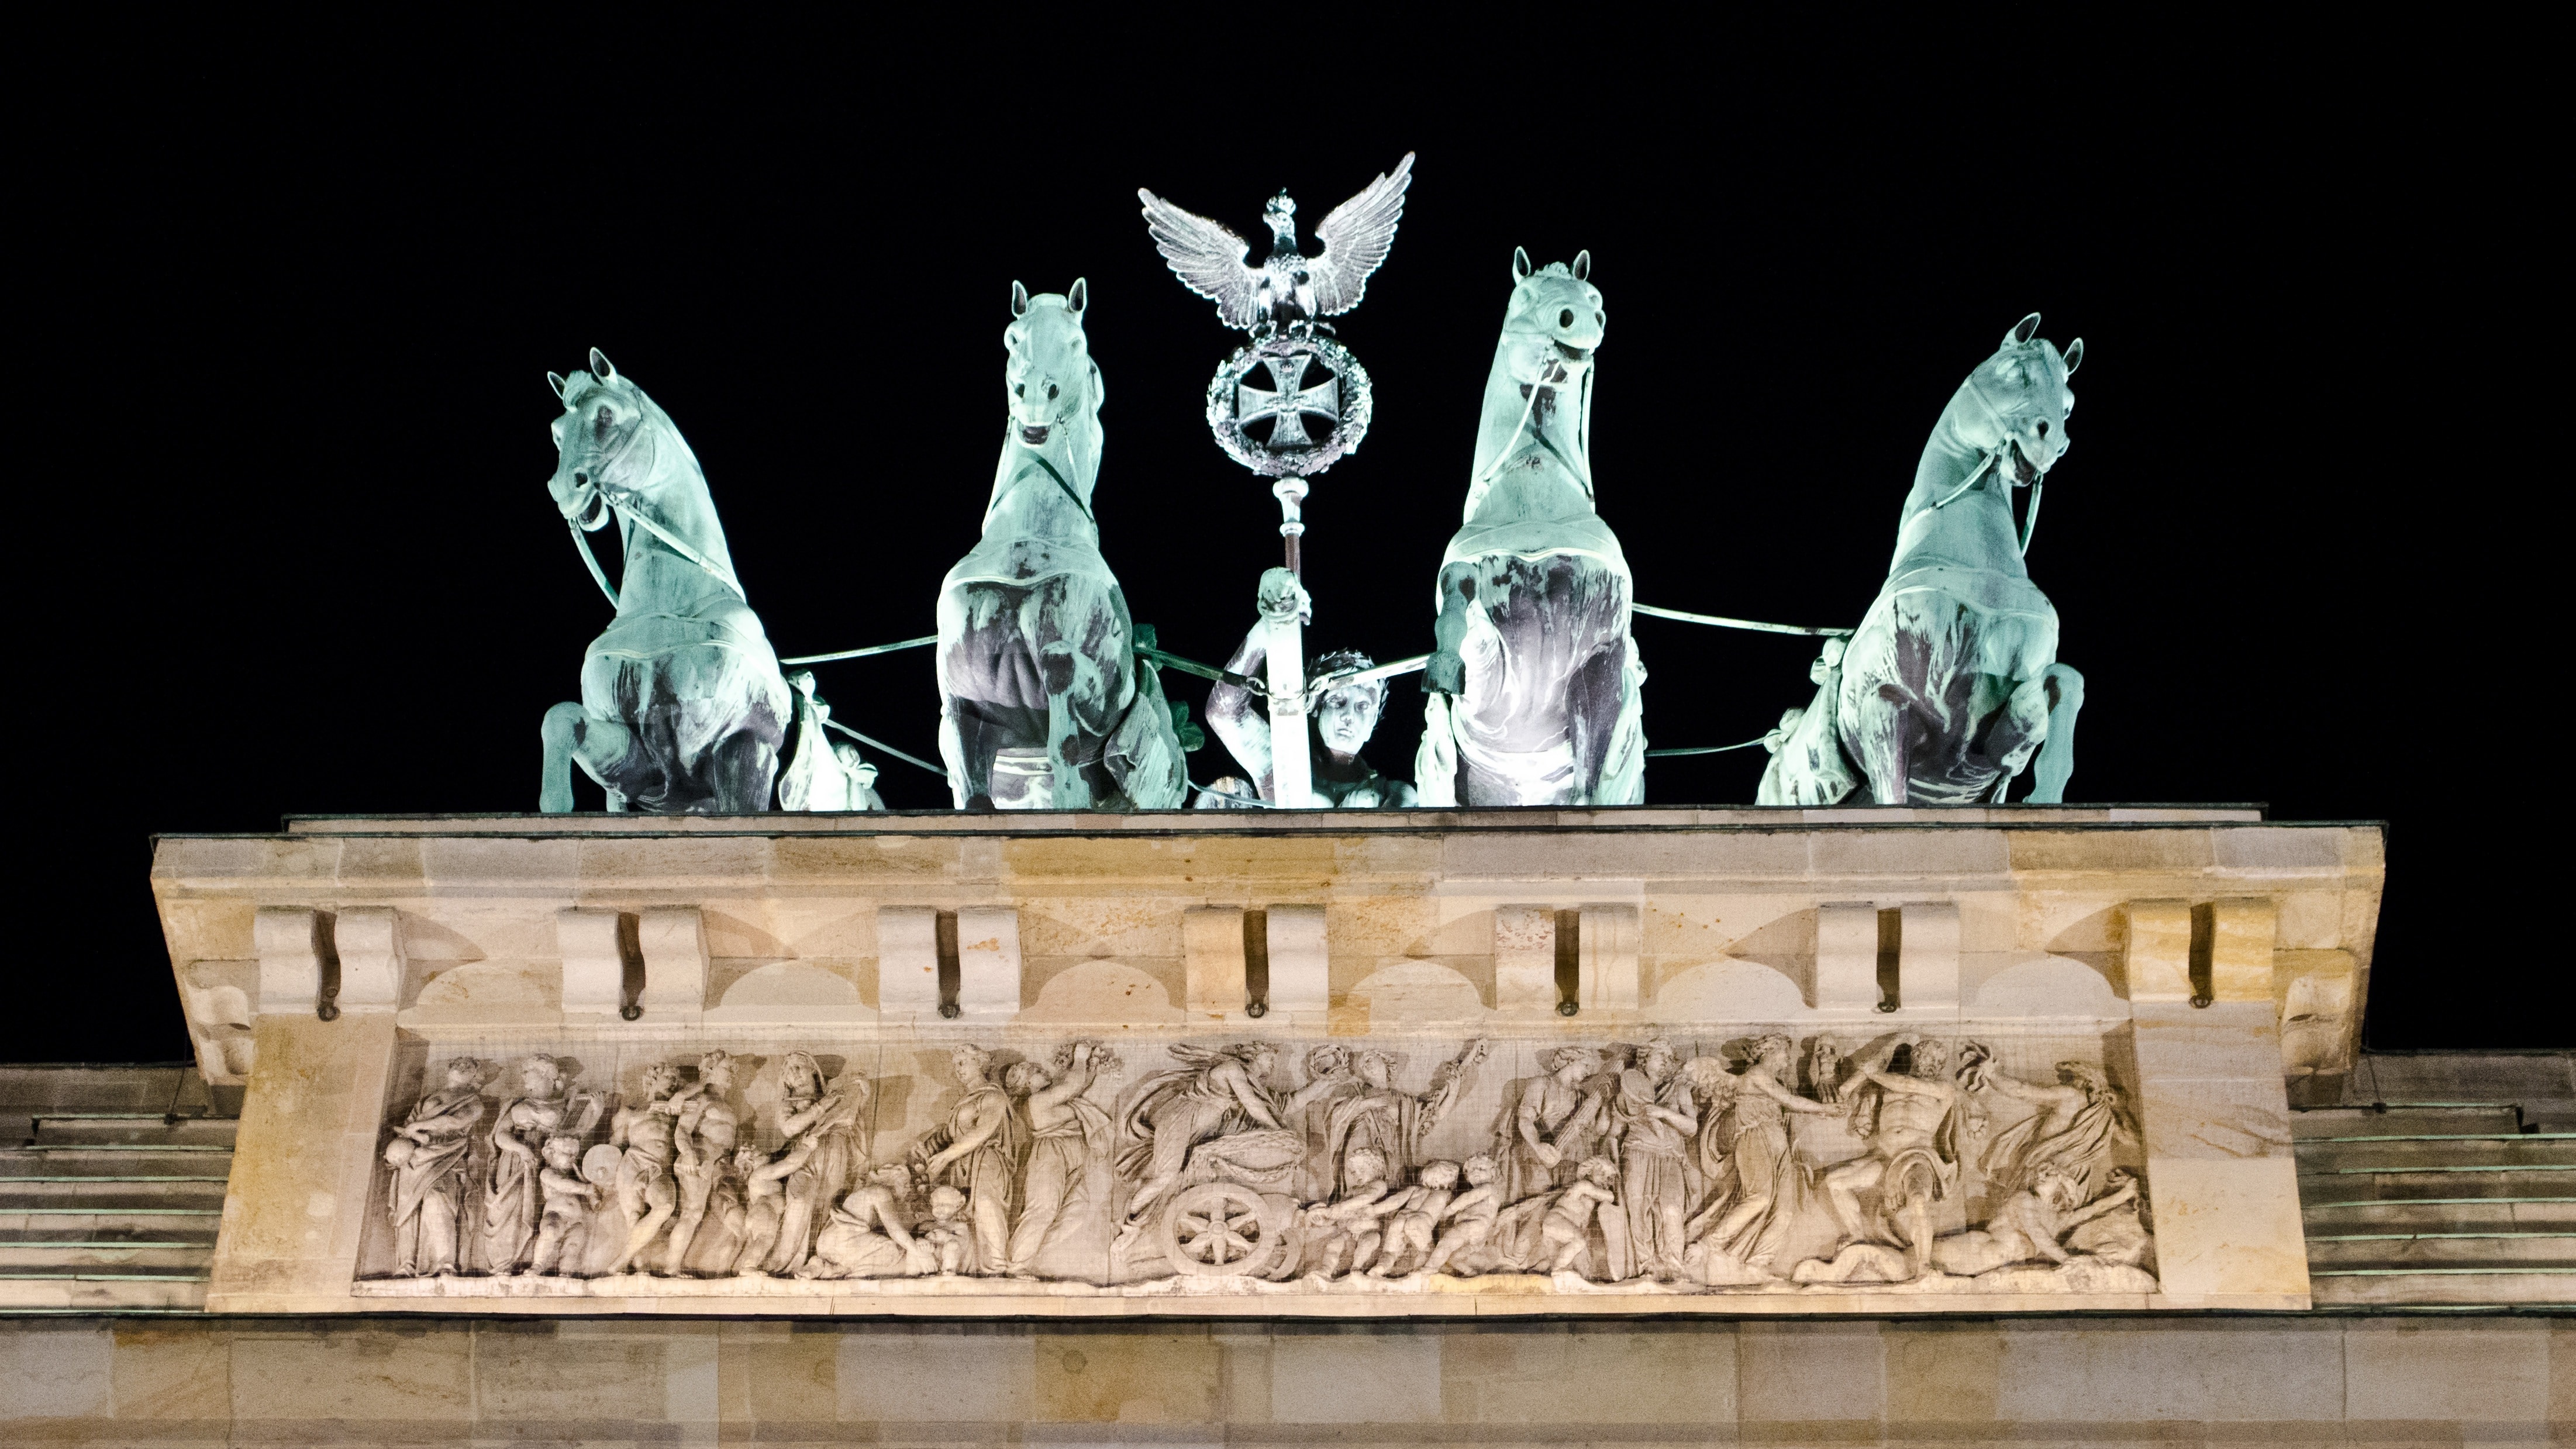 Berlin, Brandenburg Gate, Germany, model - object, animal themes